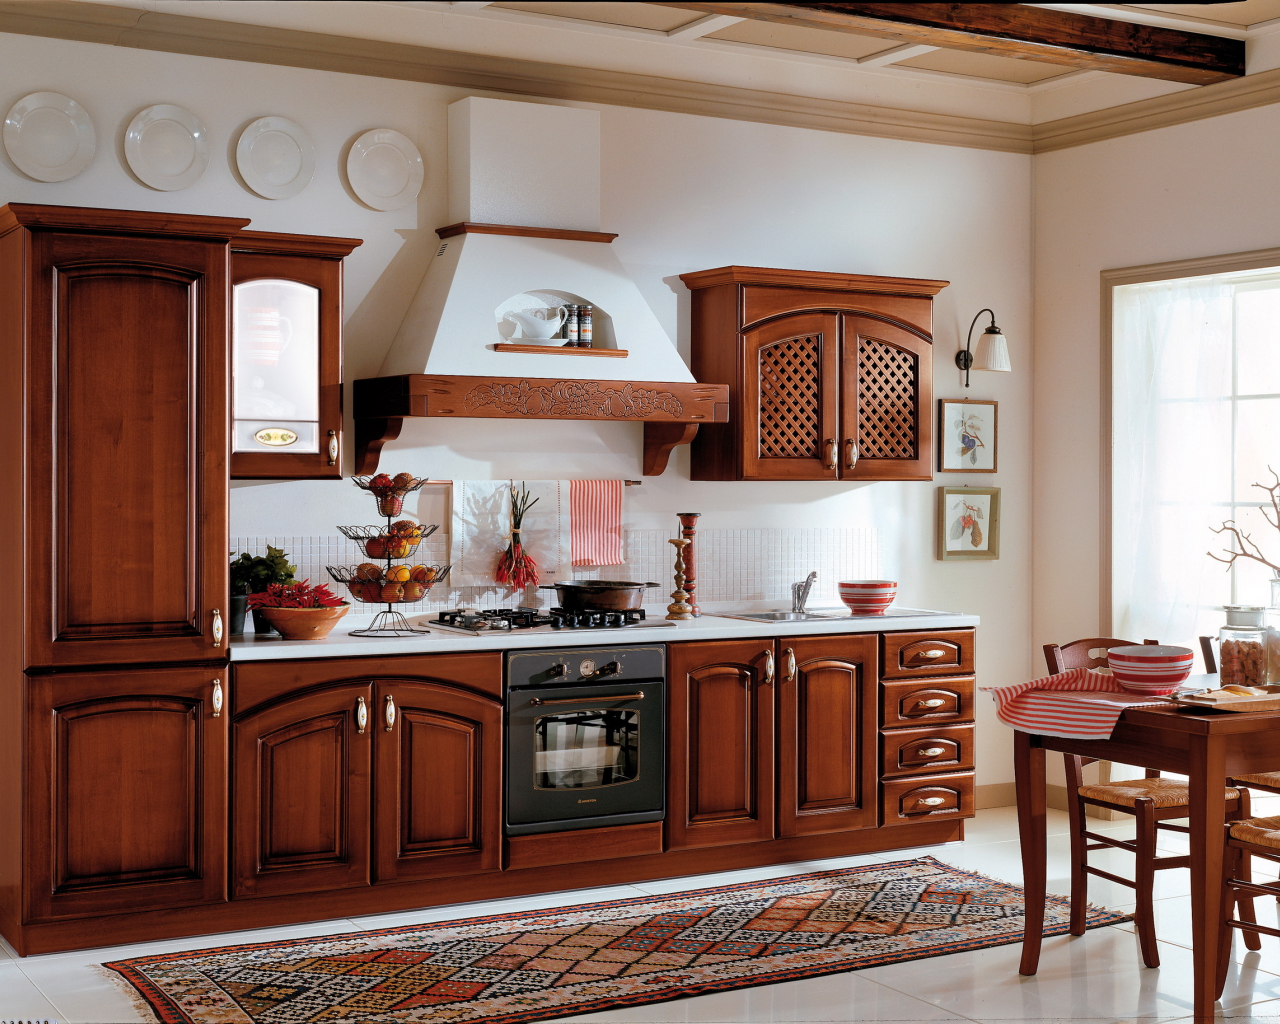 деревянный, интерьер, кухня, дизайн